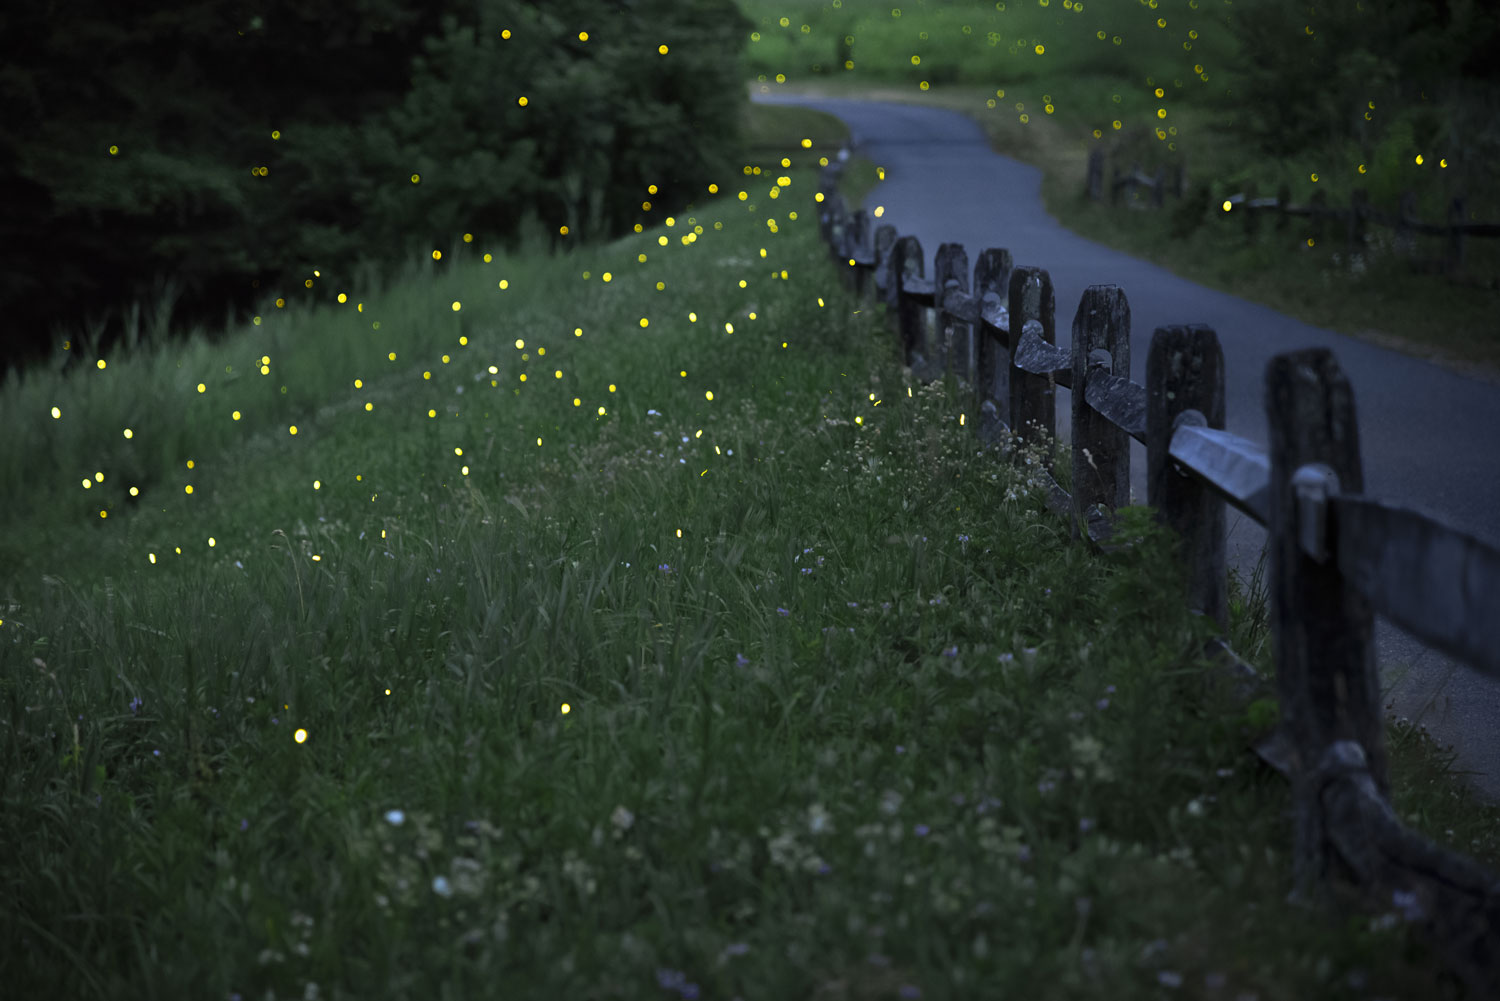 Fireflies lighting up in the dark along a narrow roadway.